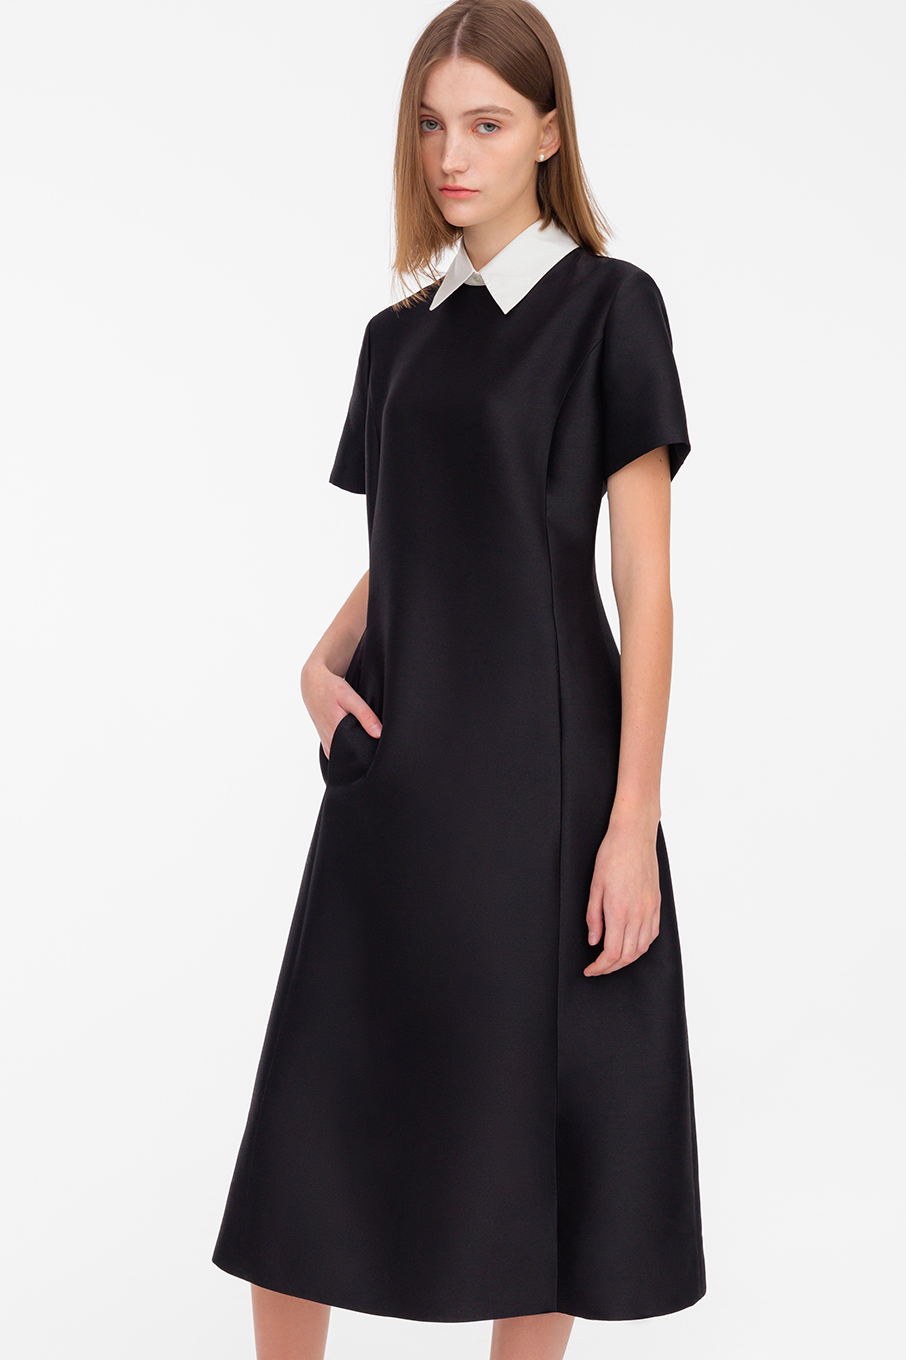 Chabay dress (Black) 2차 판매 완료 3차 입고